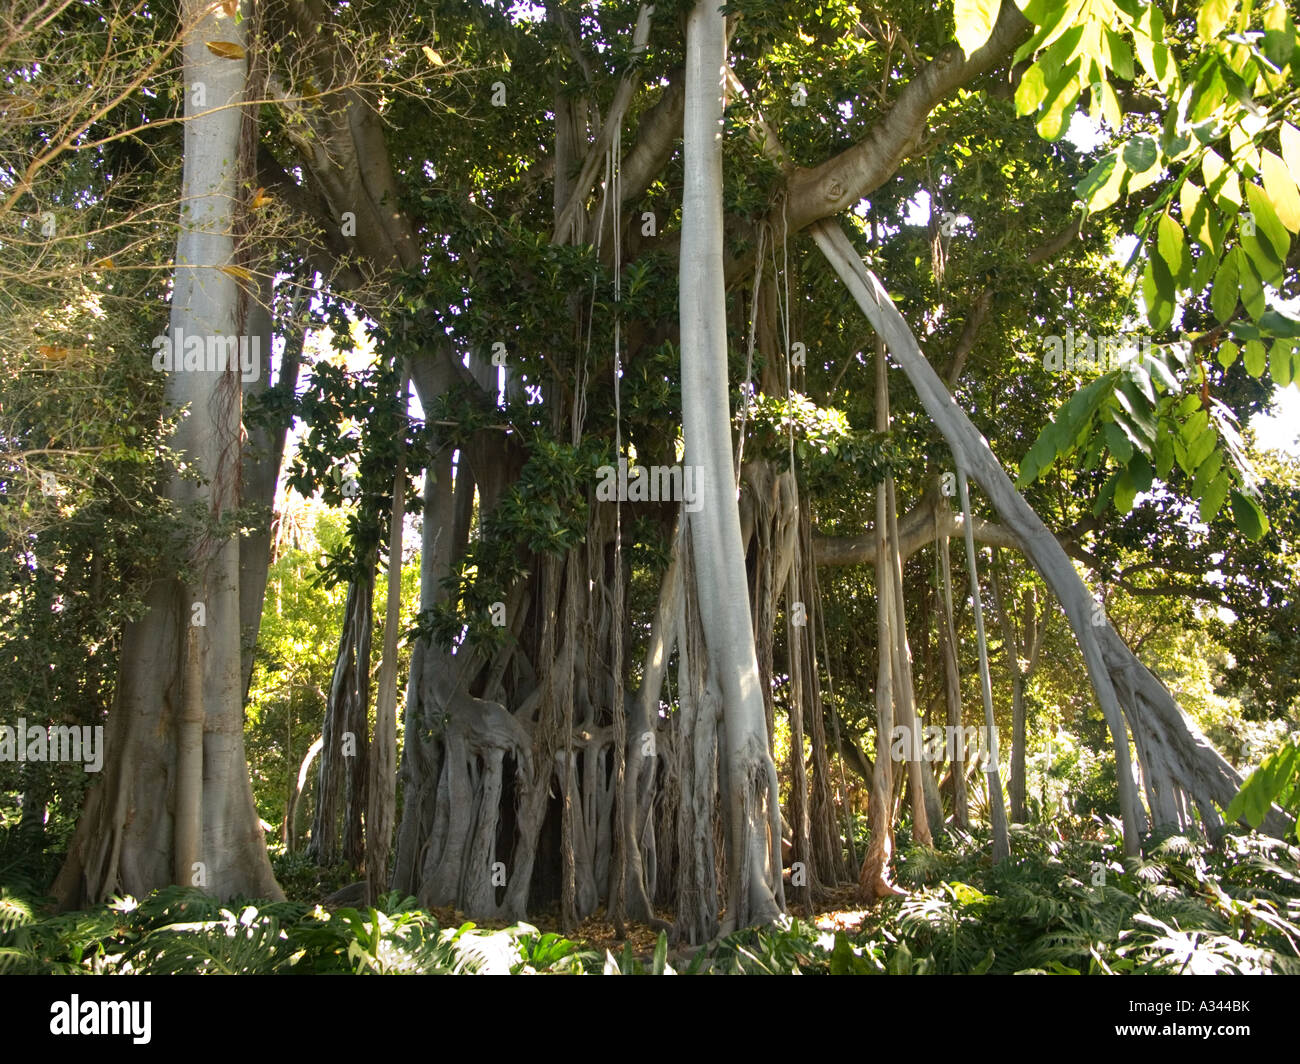 Coussapoa Dealbata also known as Rubber Tree, Ficus Macrophylla Stock Photo